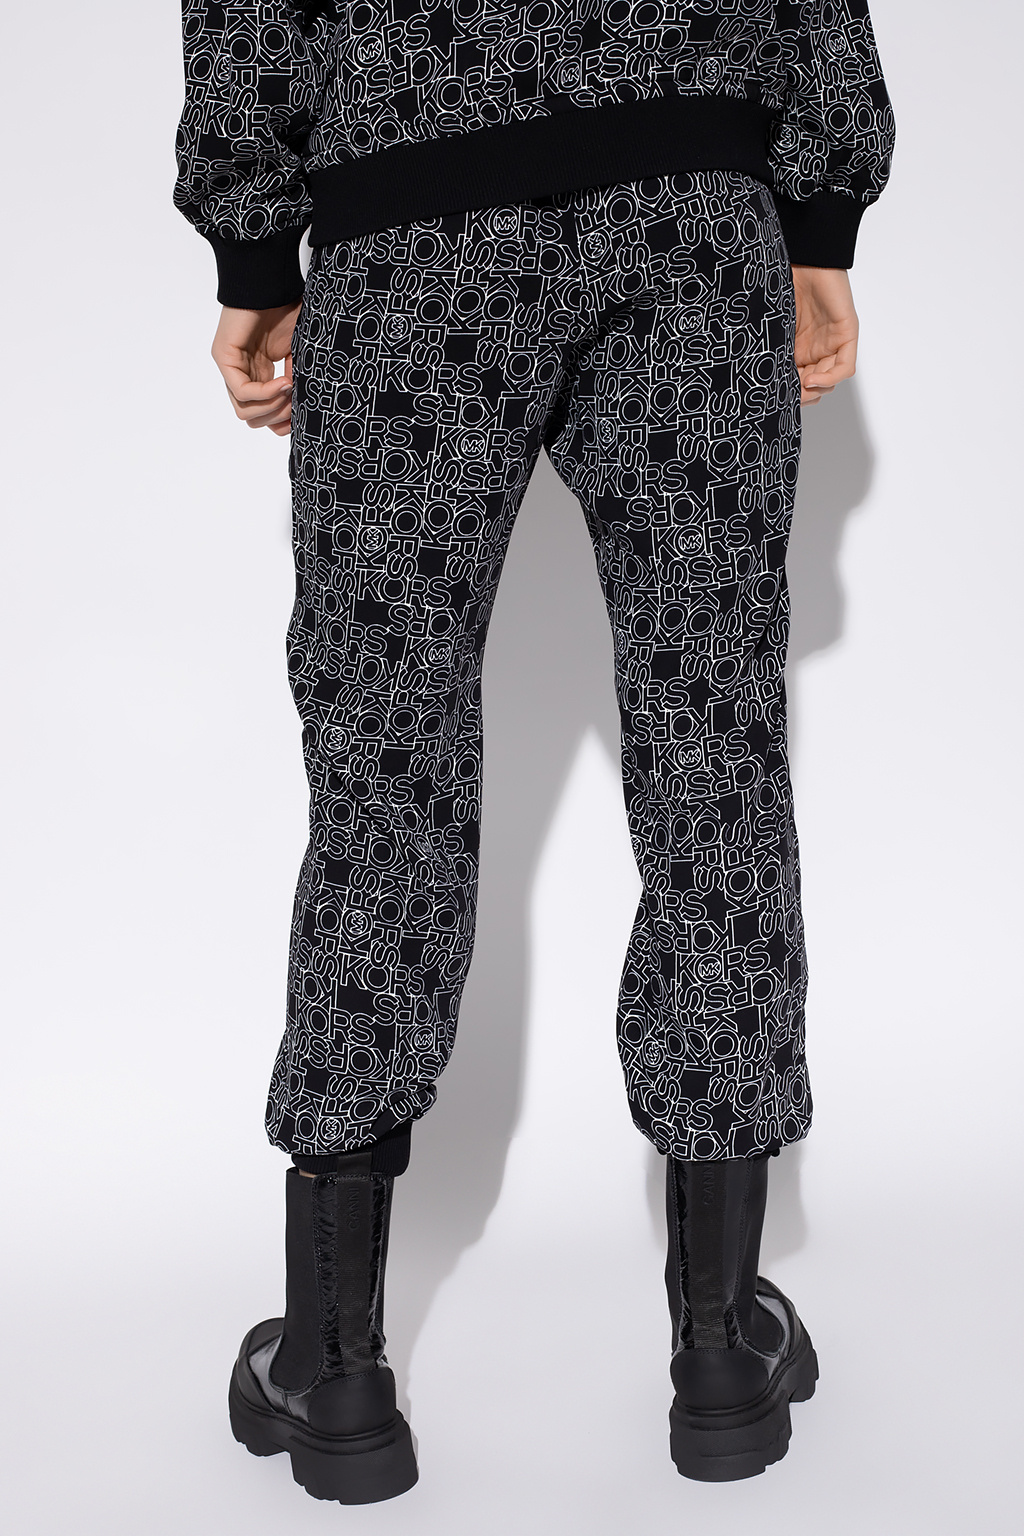 IetpShops, Michael Michael Kors Printed floral trousers, ANNEKE DRAW  WAIST PANTS